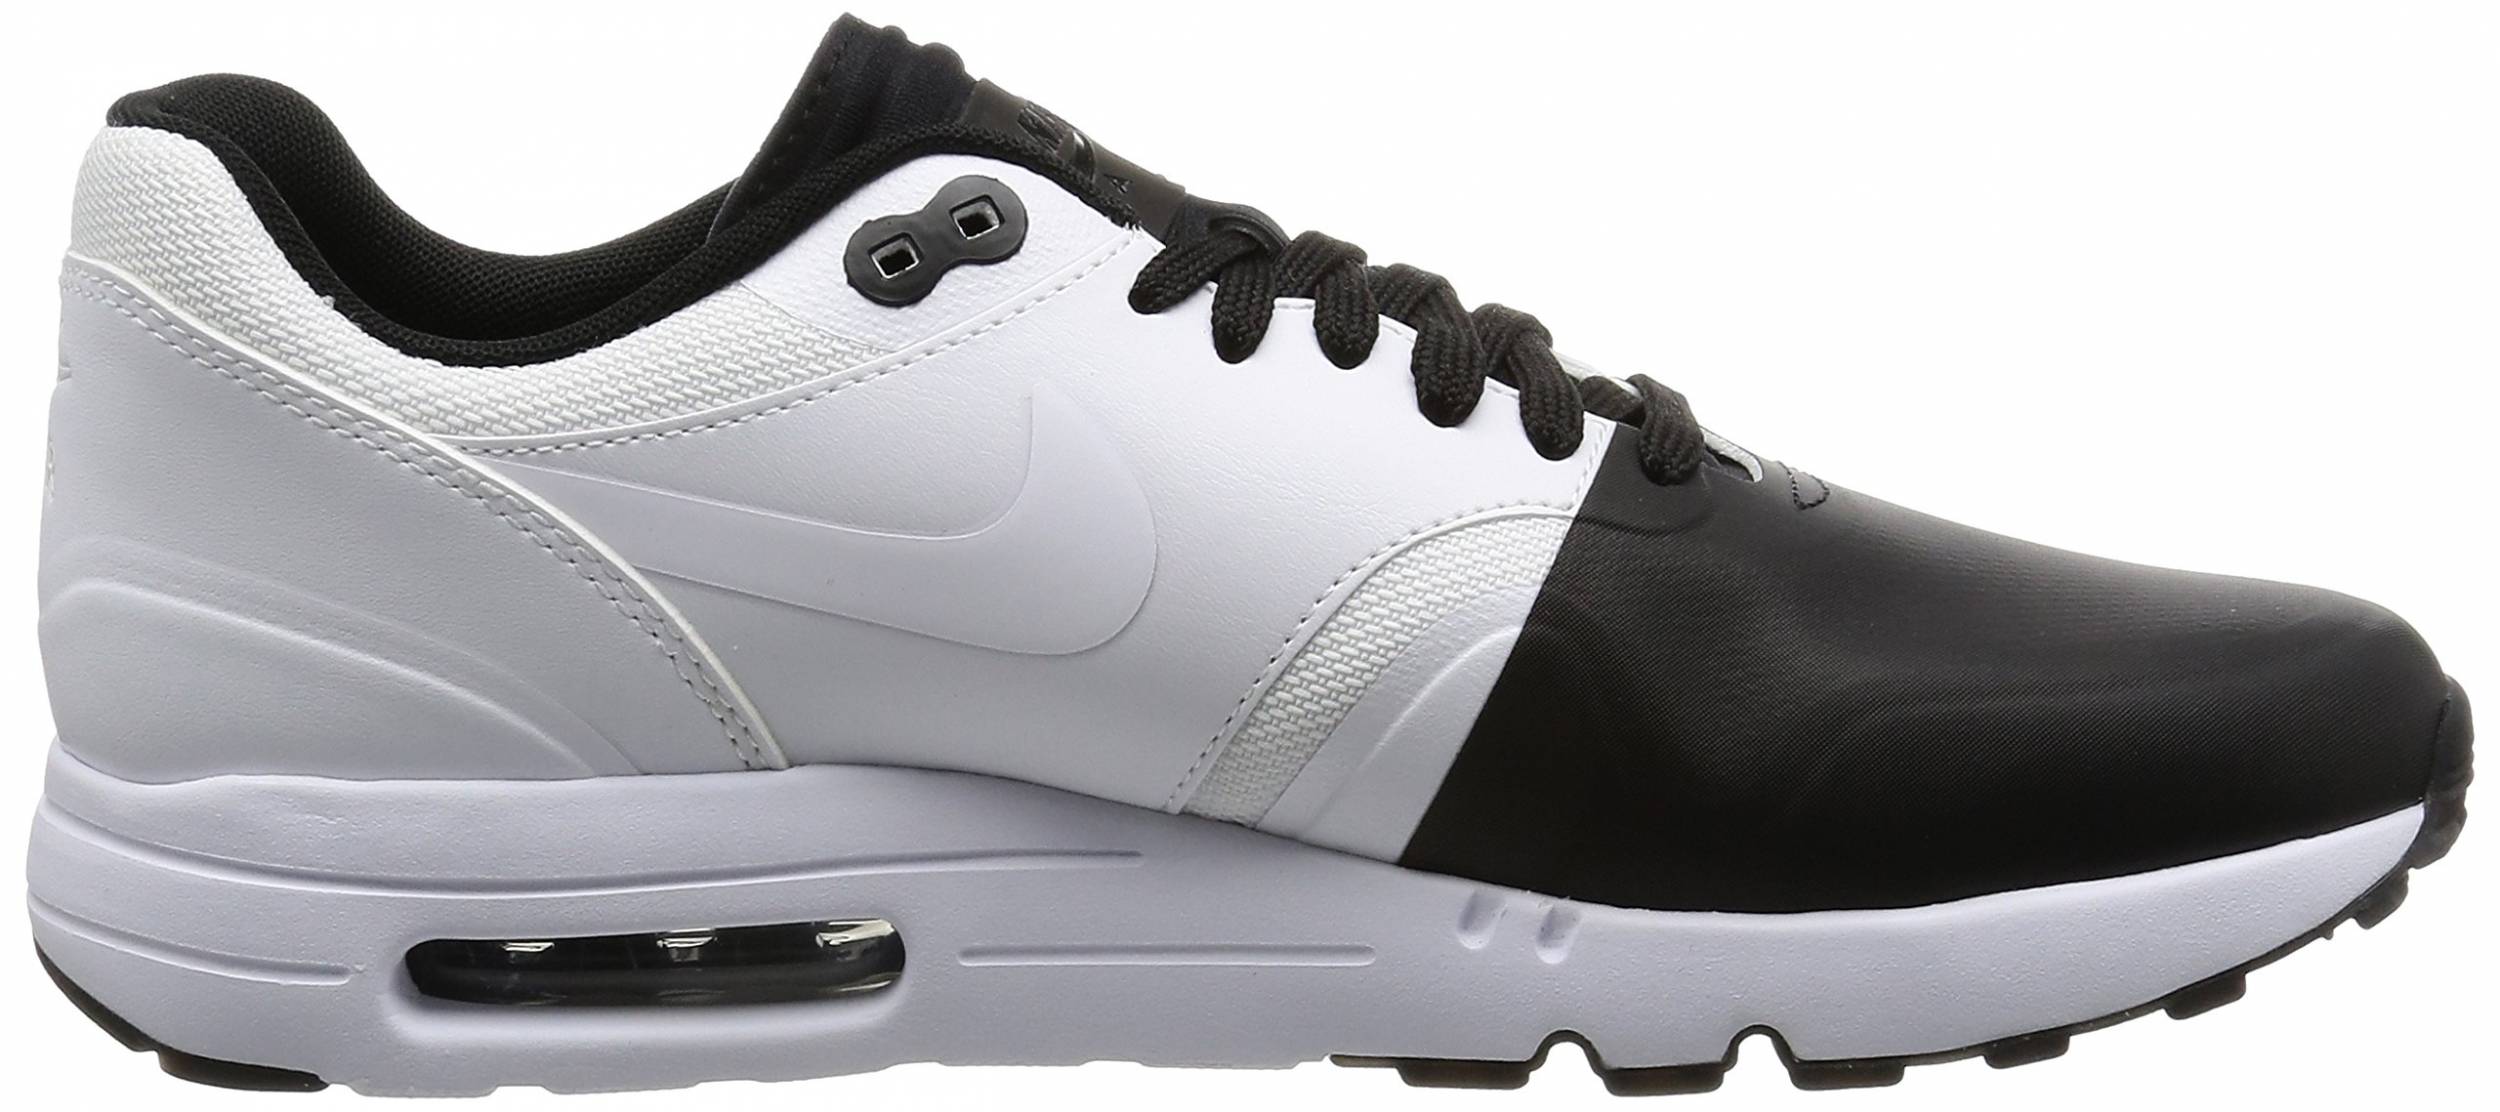 Nike Air Max 1 Ultra 2.0 SE sneakers in grey (only $77) | RunRepeat